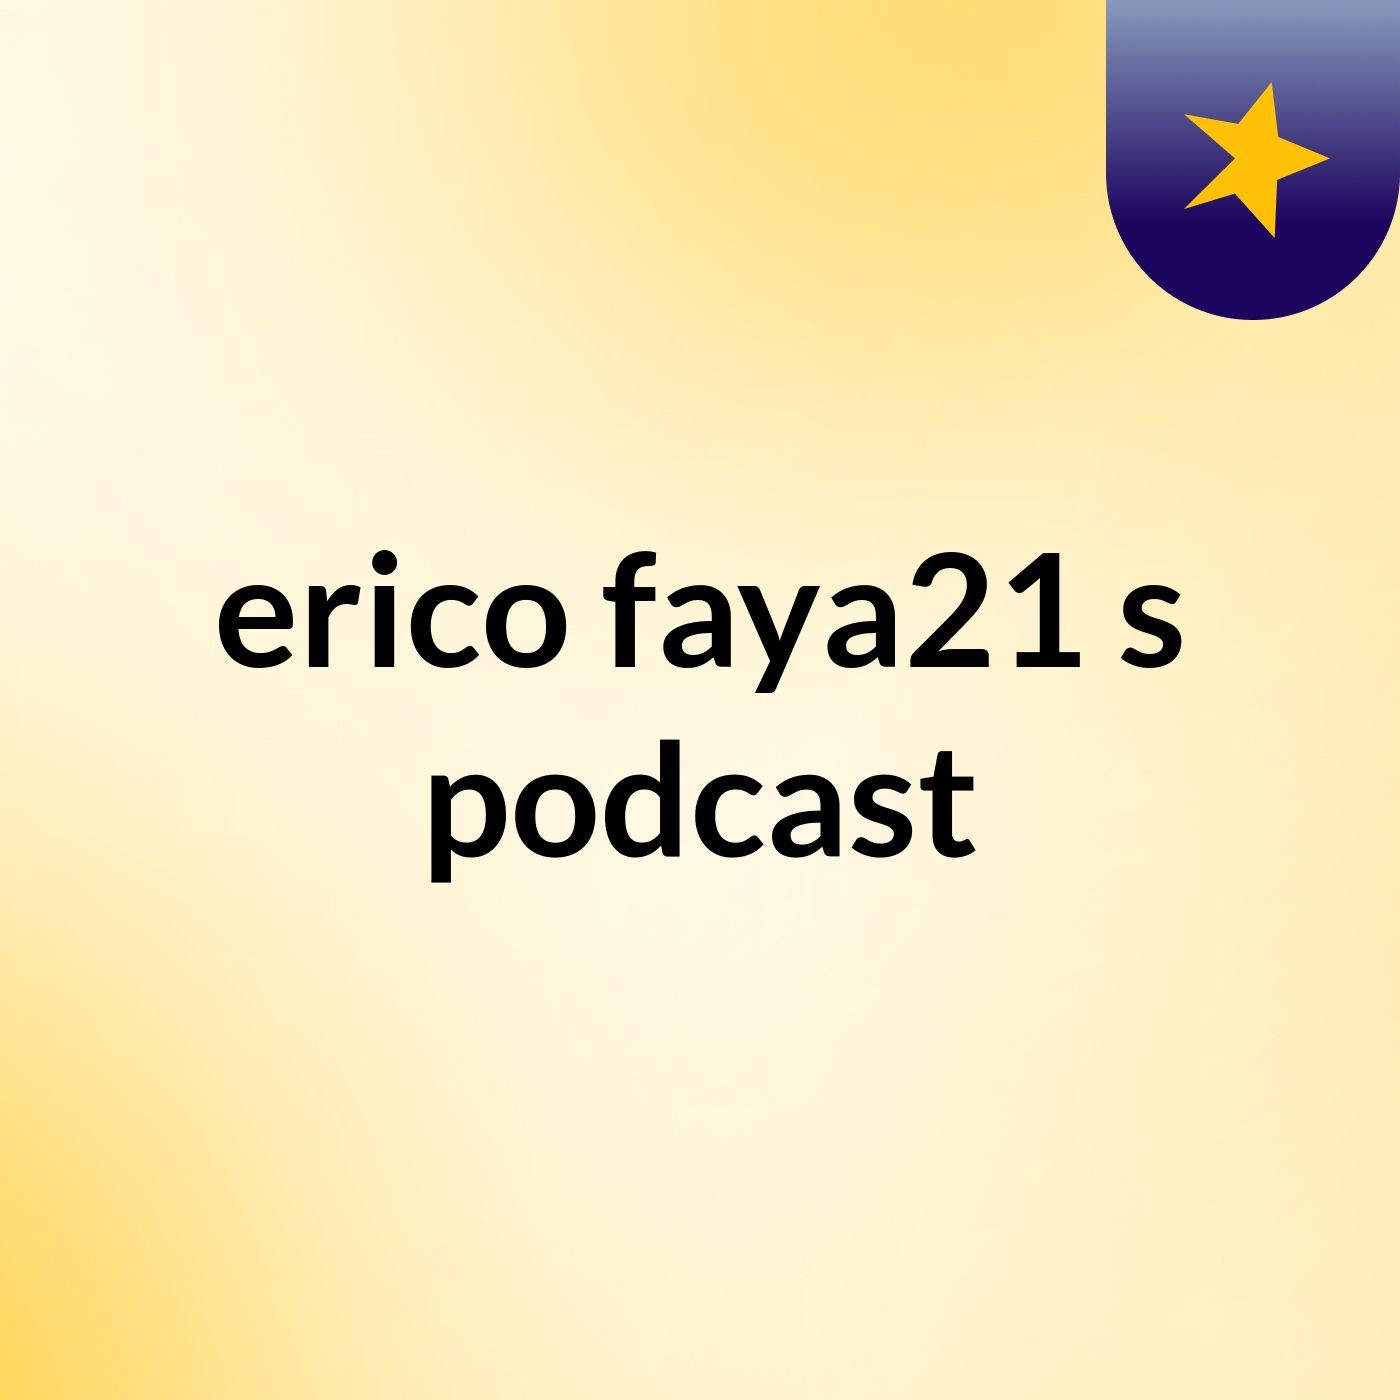 erico faya21's podcast